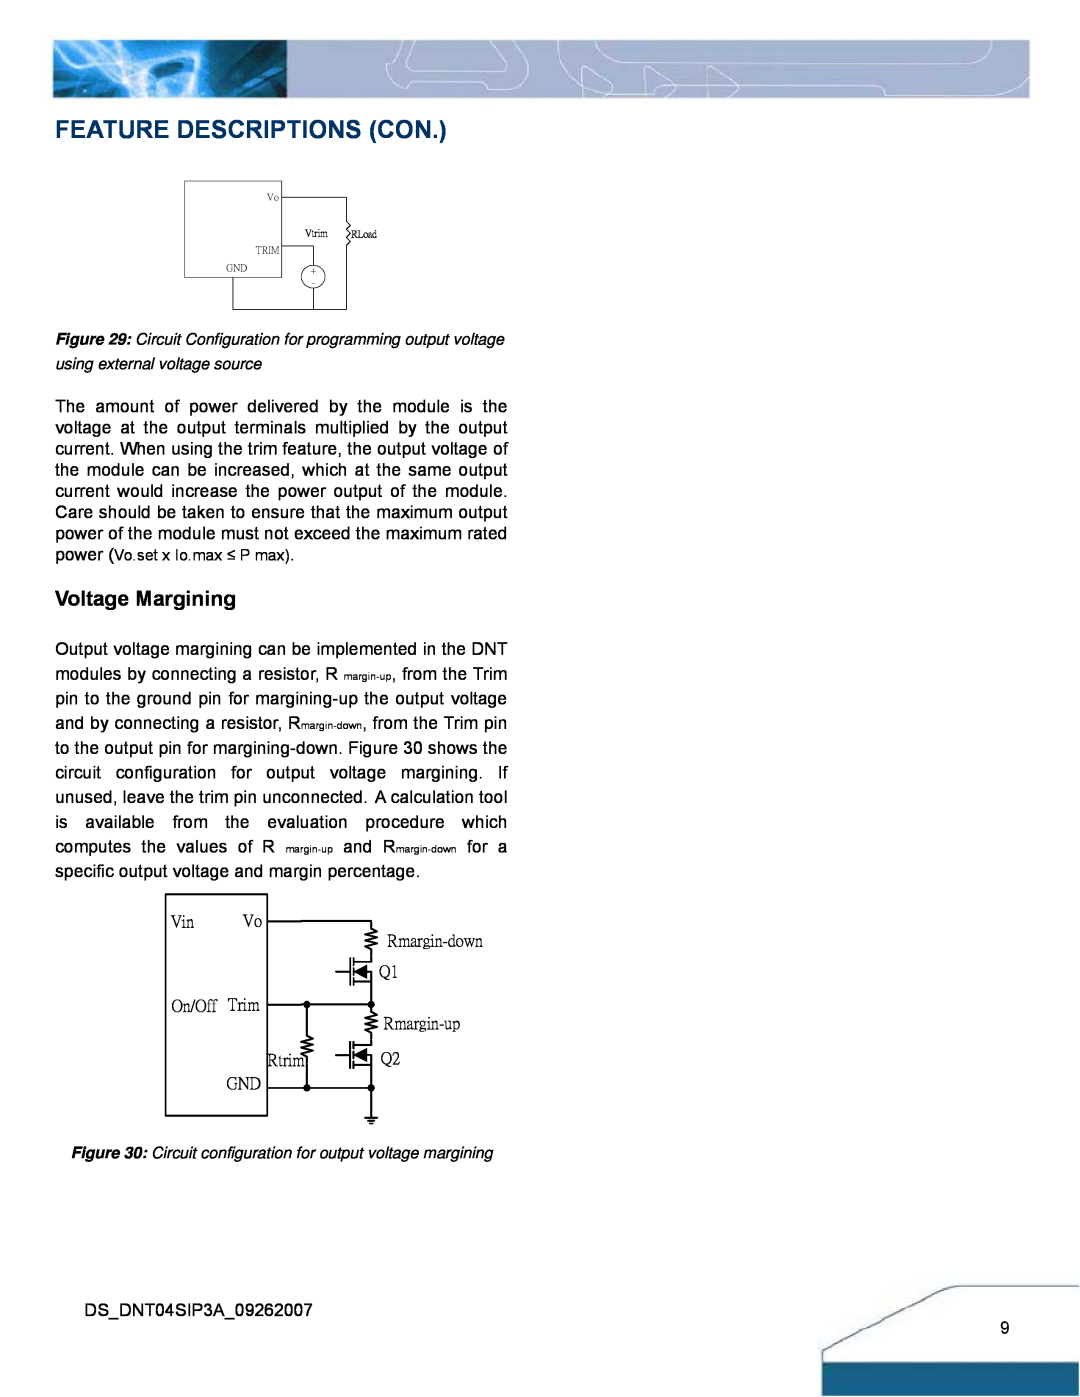 Delta Electronics DNT04 manual Feature Descriptions Con, Voltage Margining 